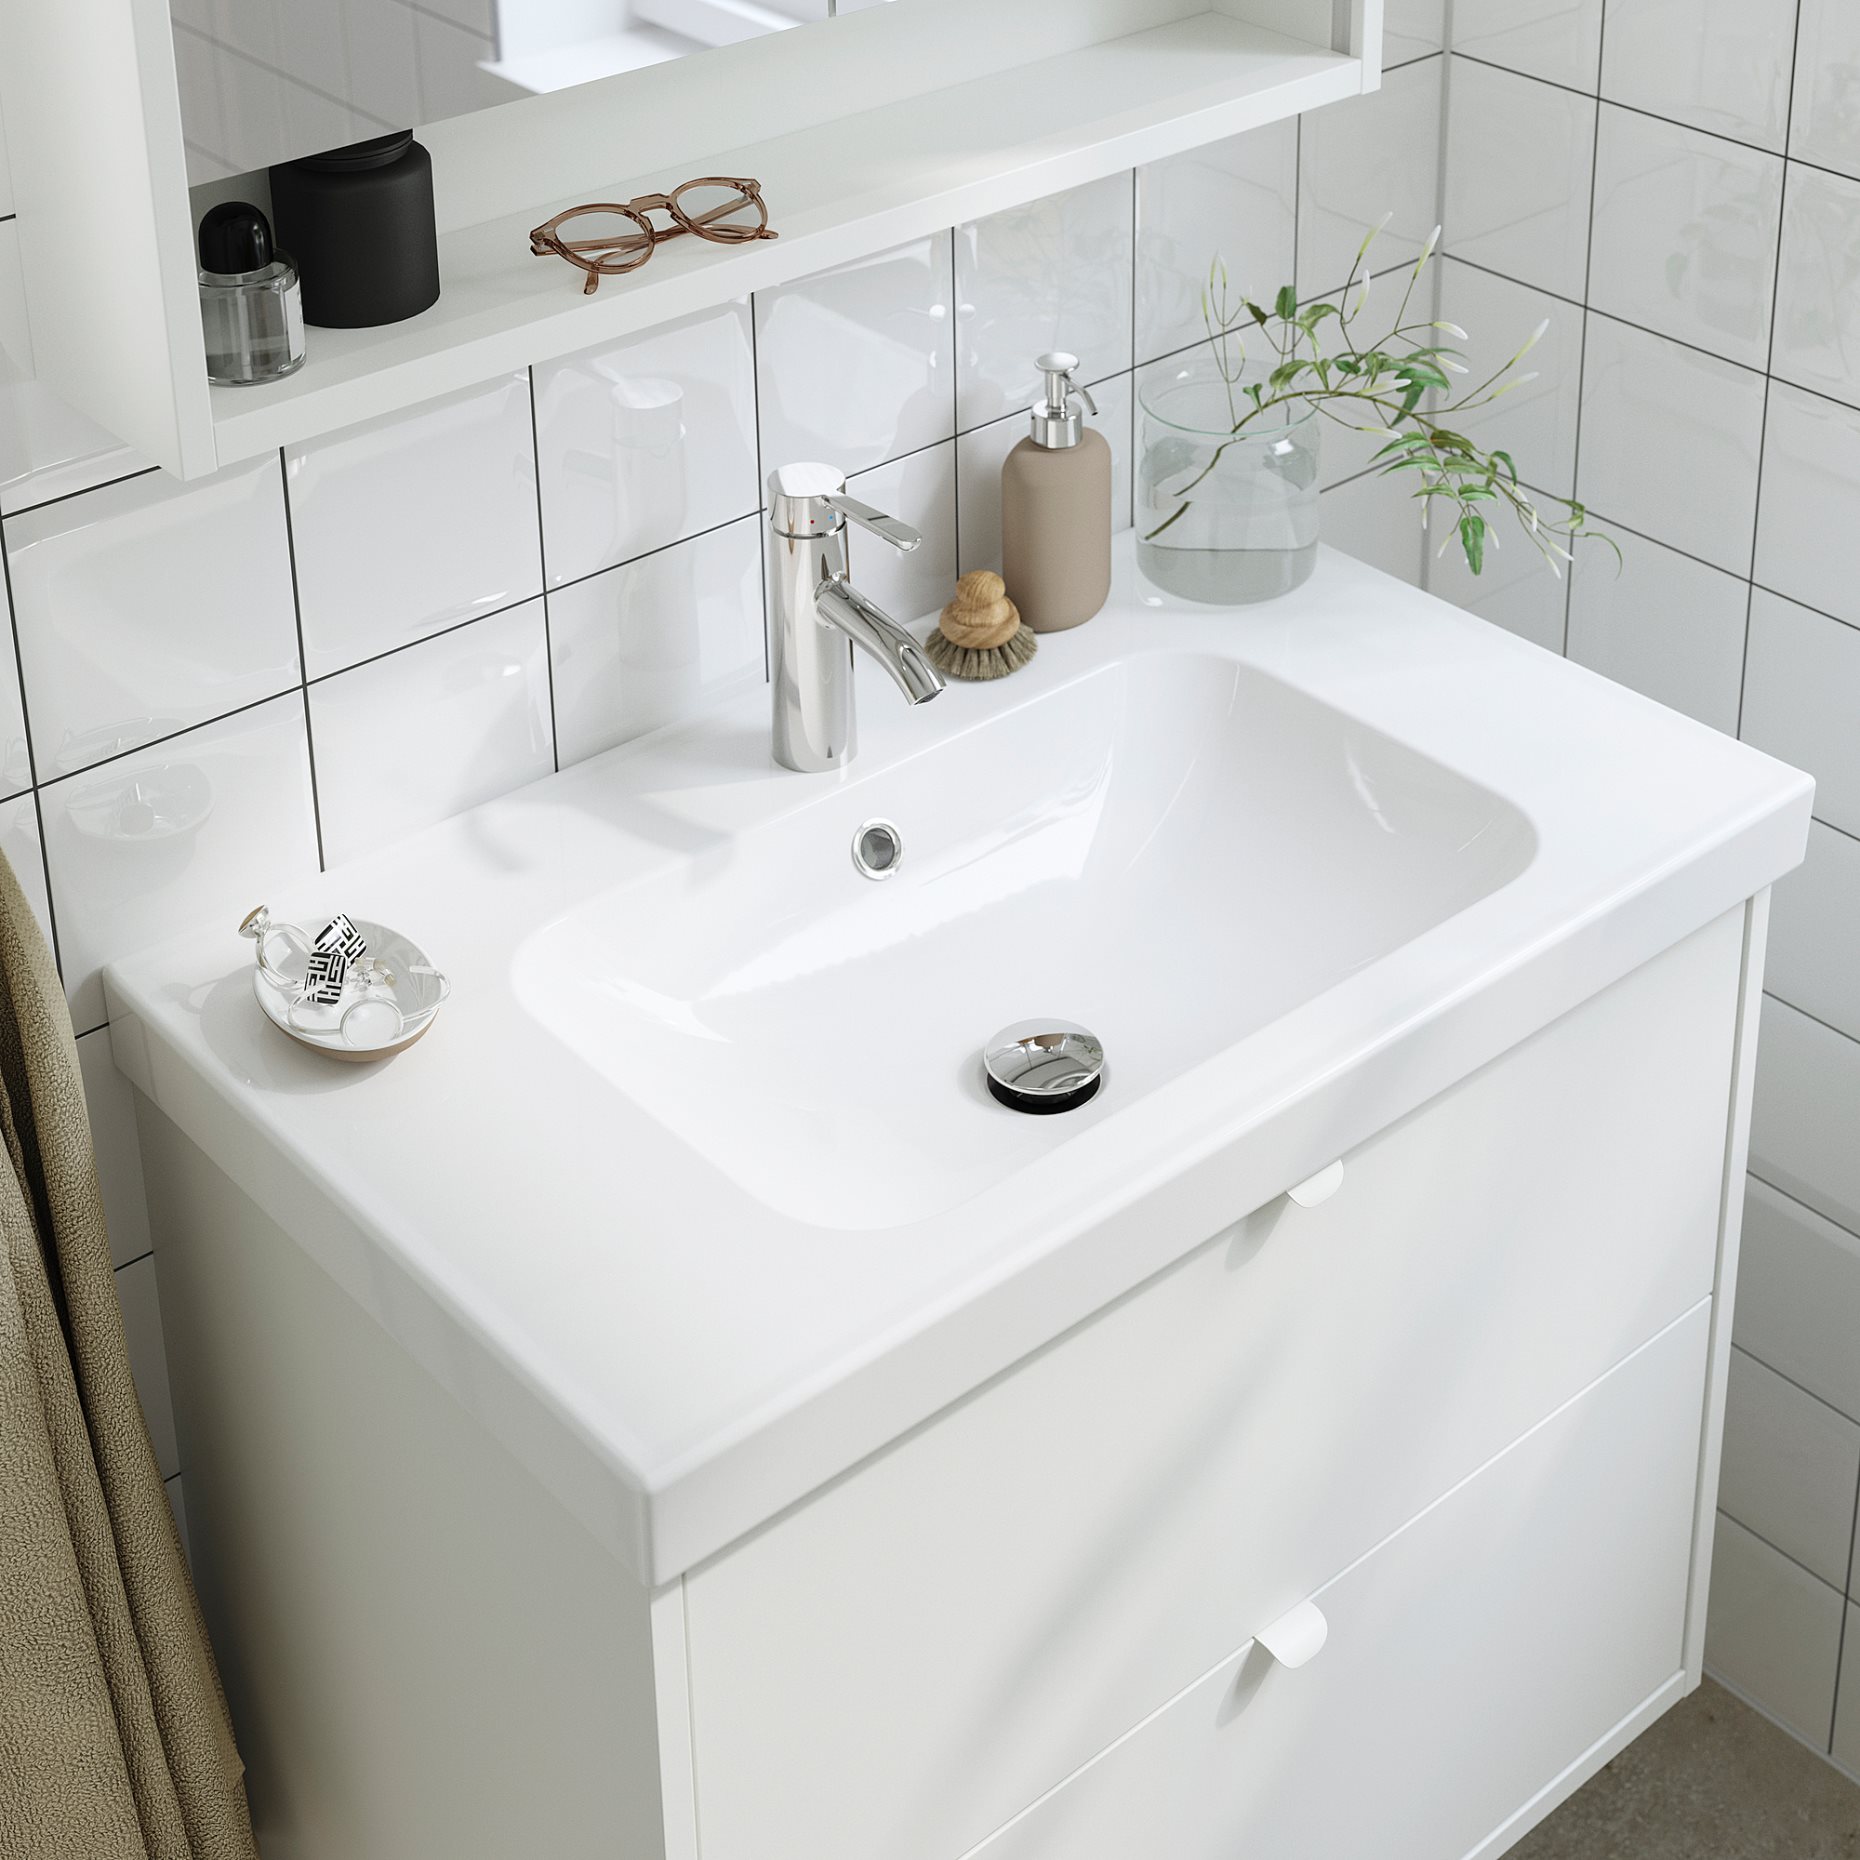 TANNFORSEN/ORRSJON, wash-stand with drawers/wash-basin/tap, 82x49x69 cm, 095.212.89